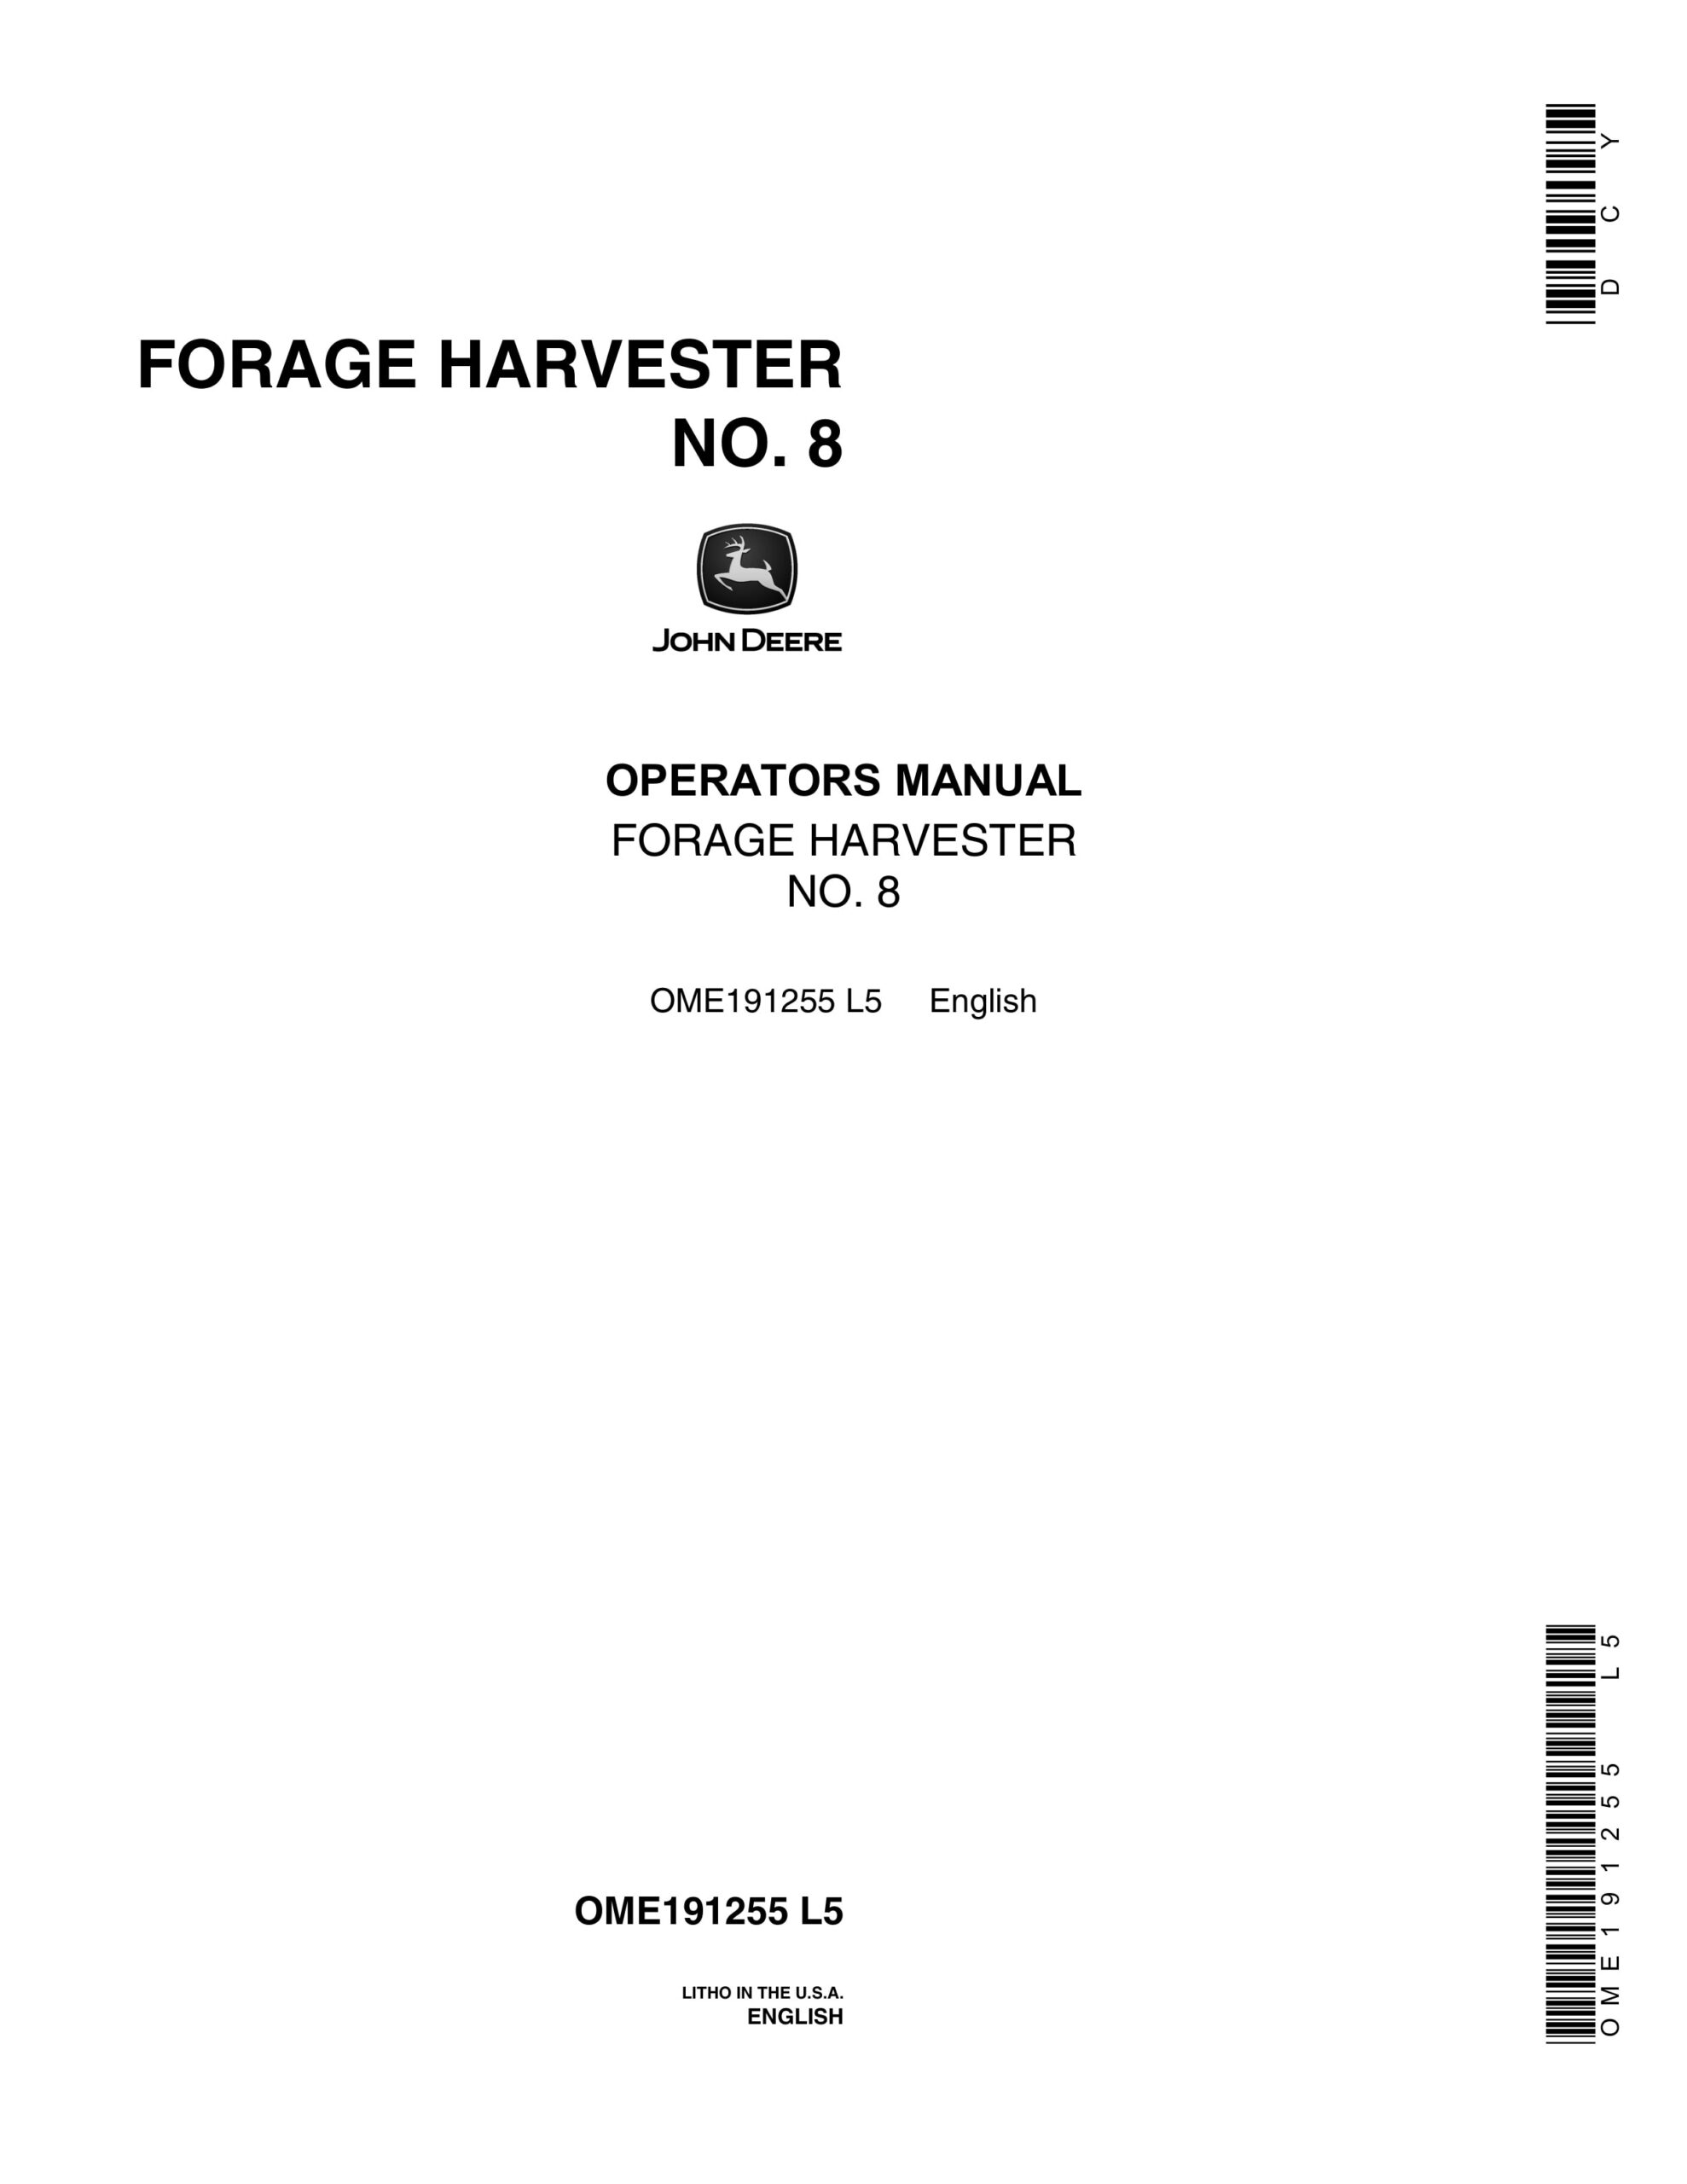 John Deere NO. 8 Forage Harvesters Operator Manual OME191255-1